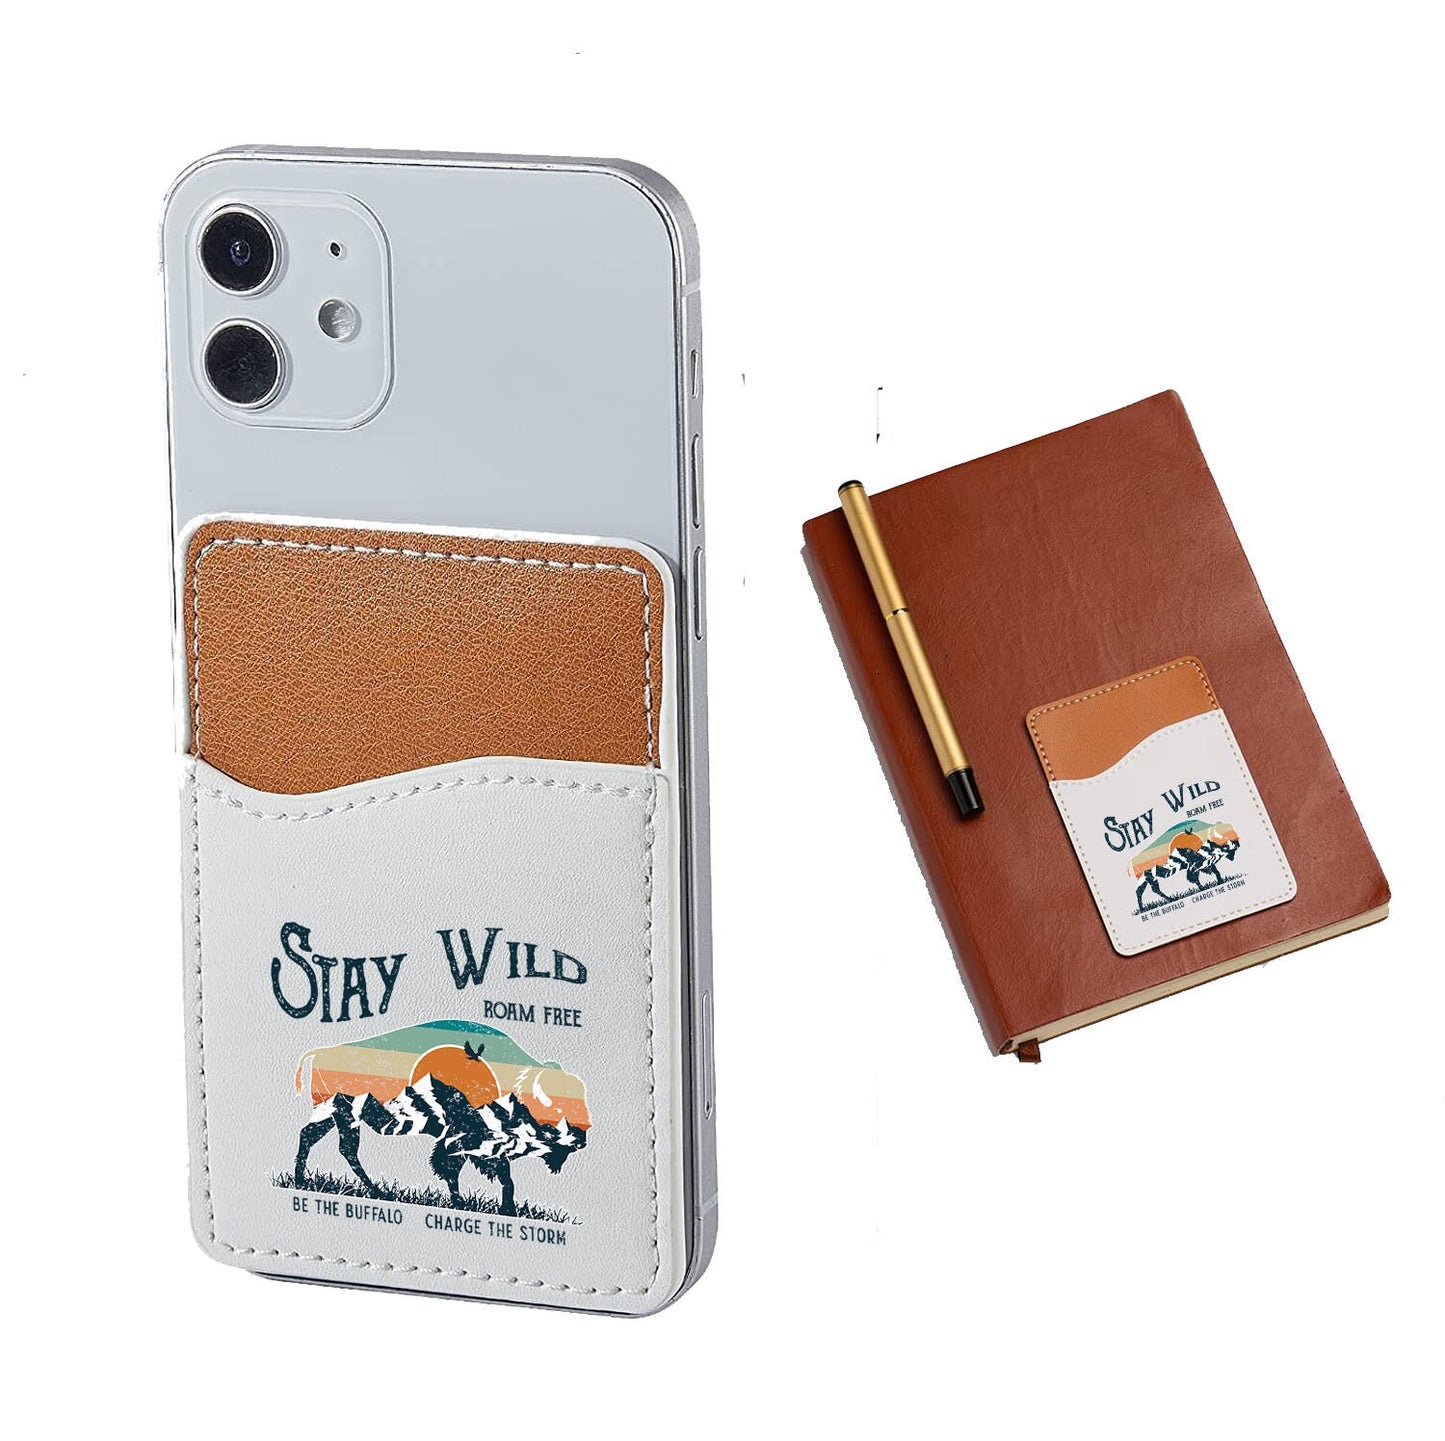 Stay Wild Roam Free Buffalo Phone Wallet Credit Card Holder